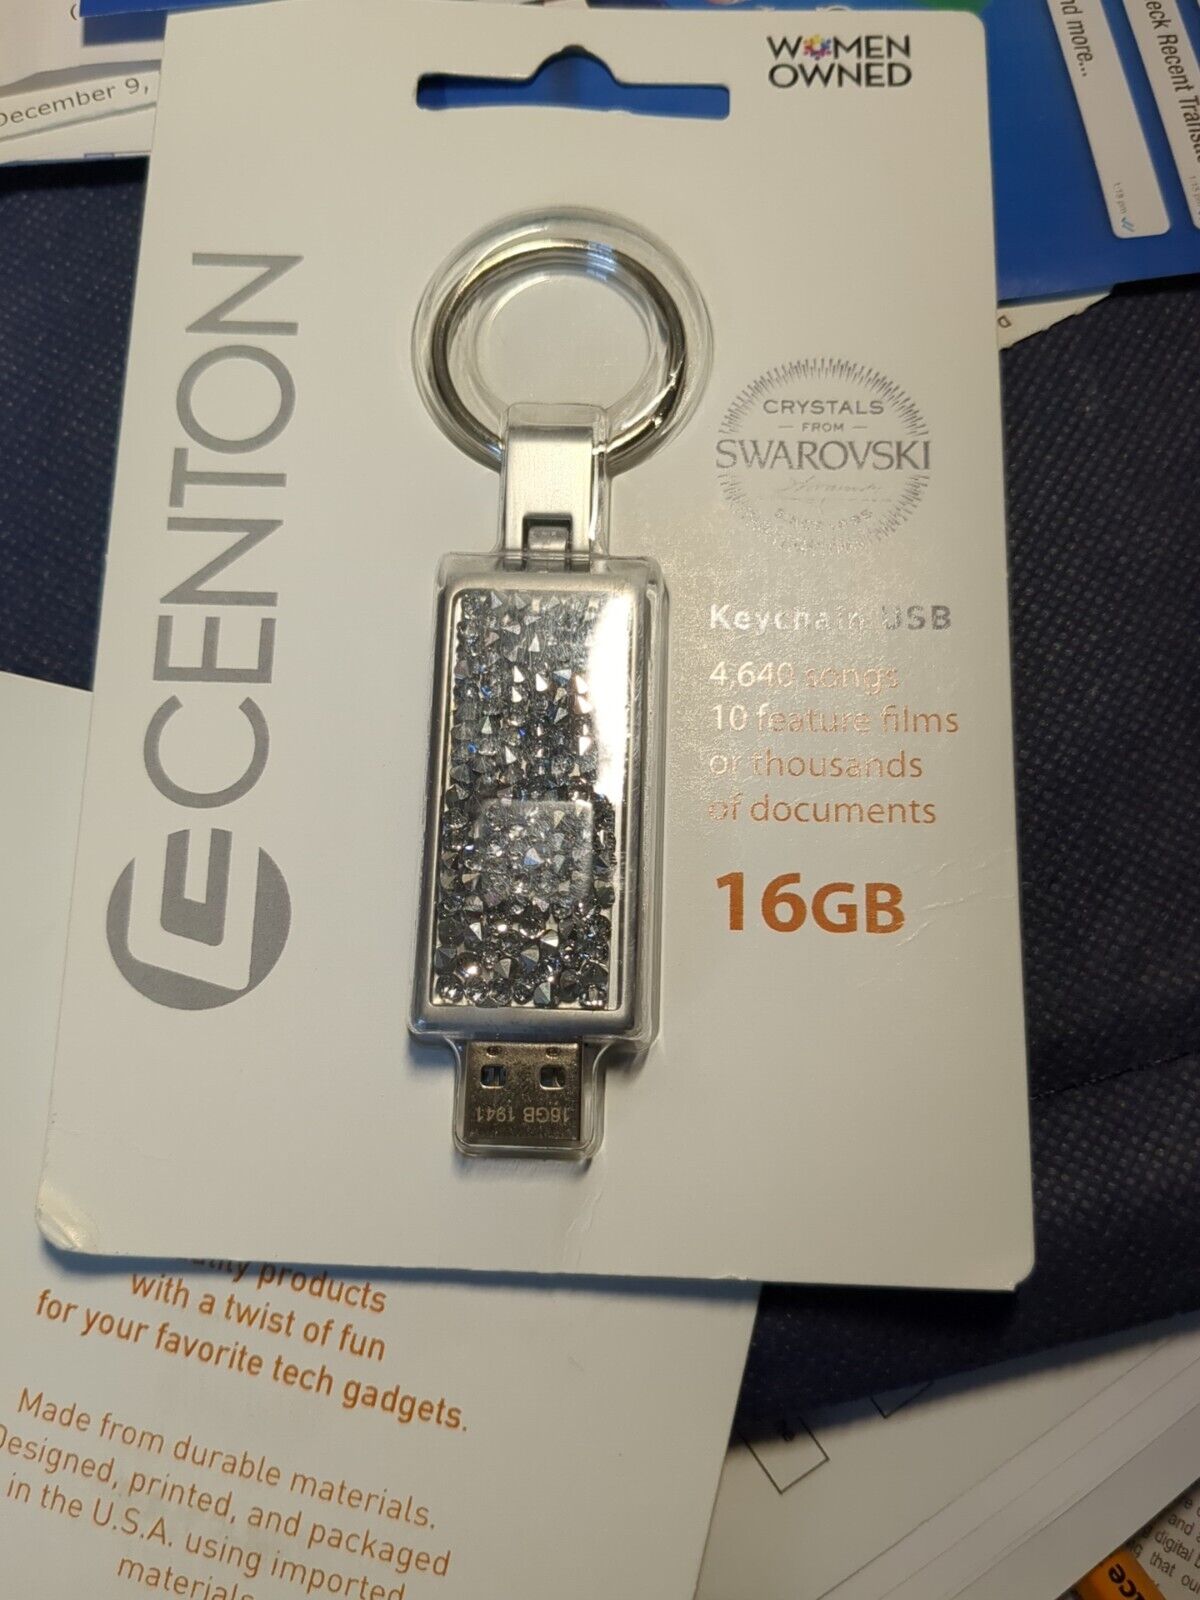 Brand New Swarovski Crystal USB 3.0 Keychain V2, 16GB + FREEBIES